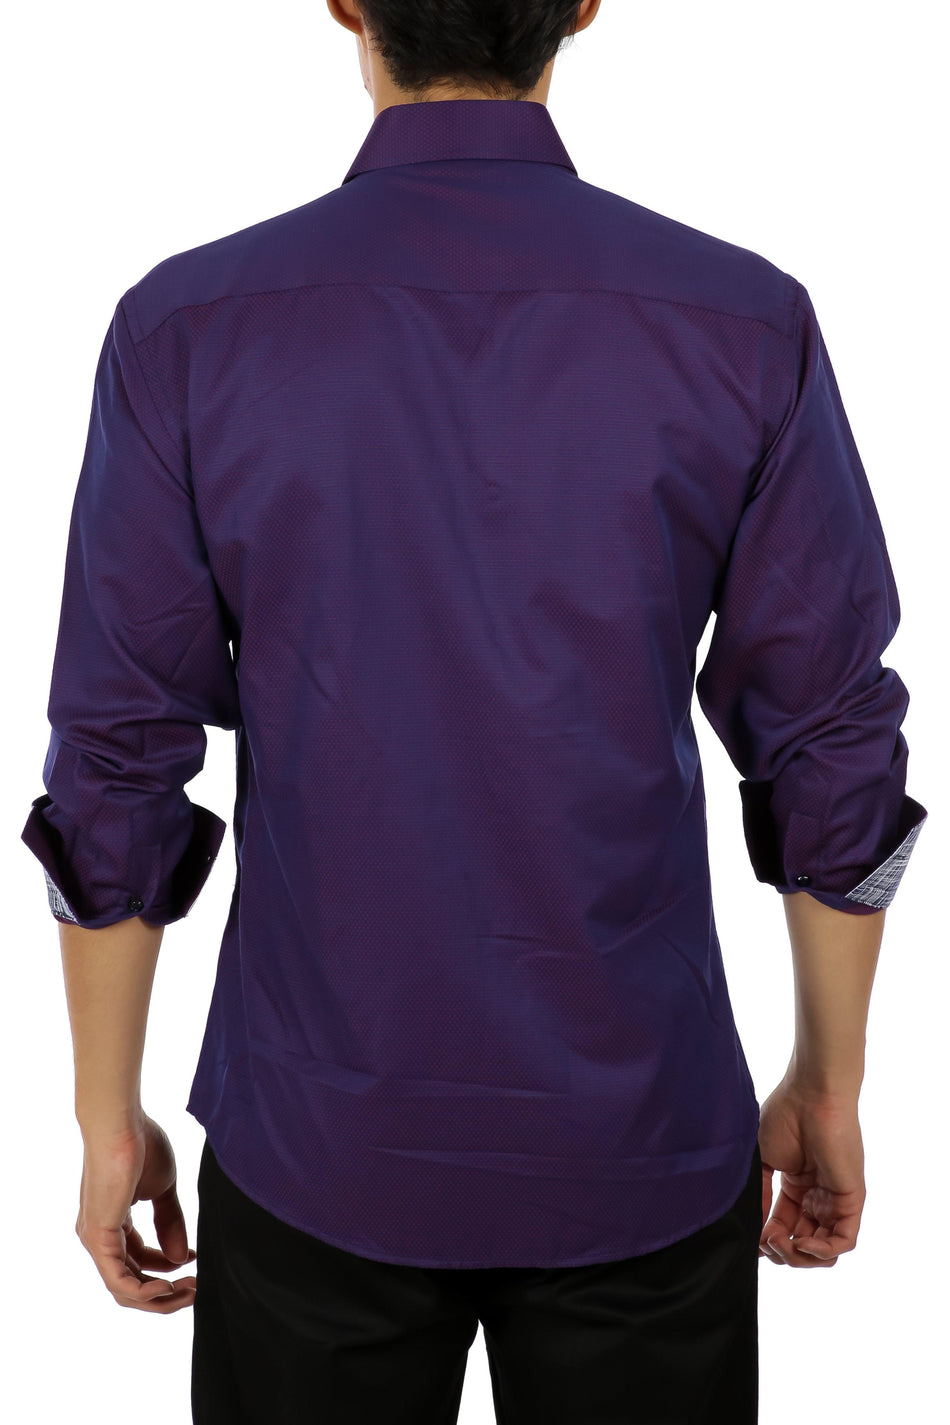 Purple Contrast Cuff Long Sleeve Dress Shirt